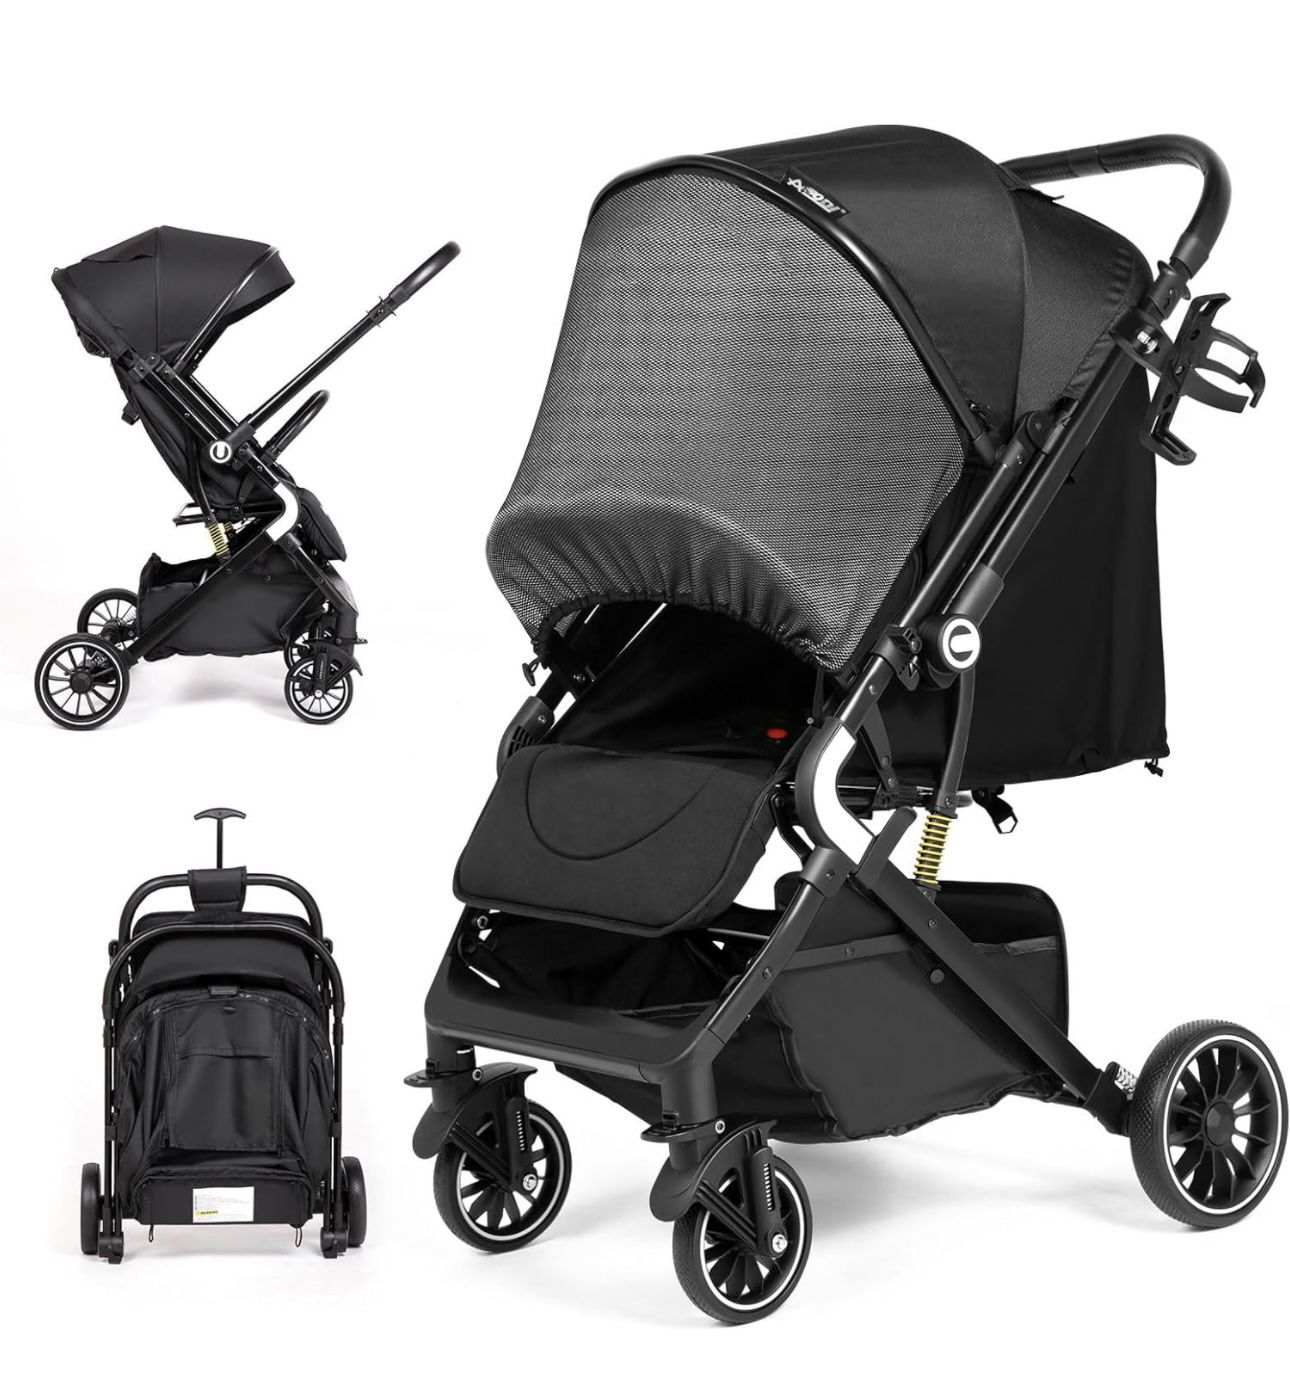 AODI Lightweight Reversible Baby Stroller